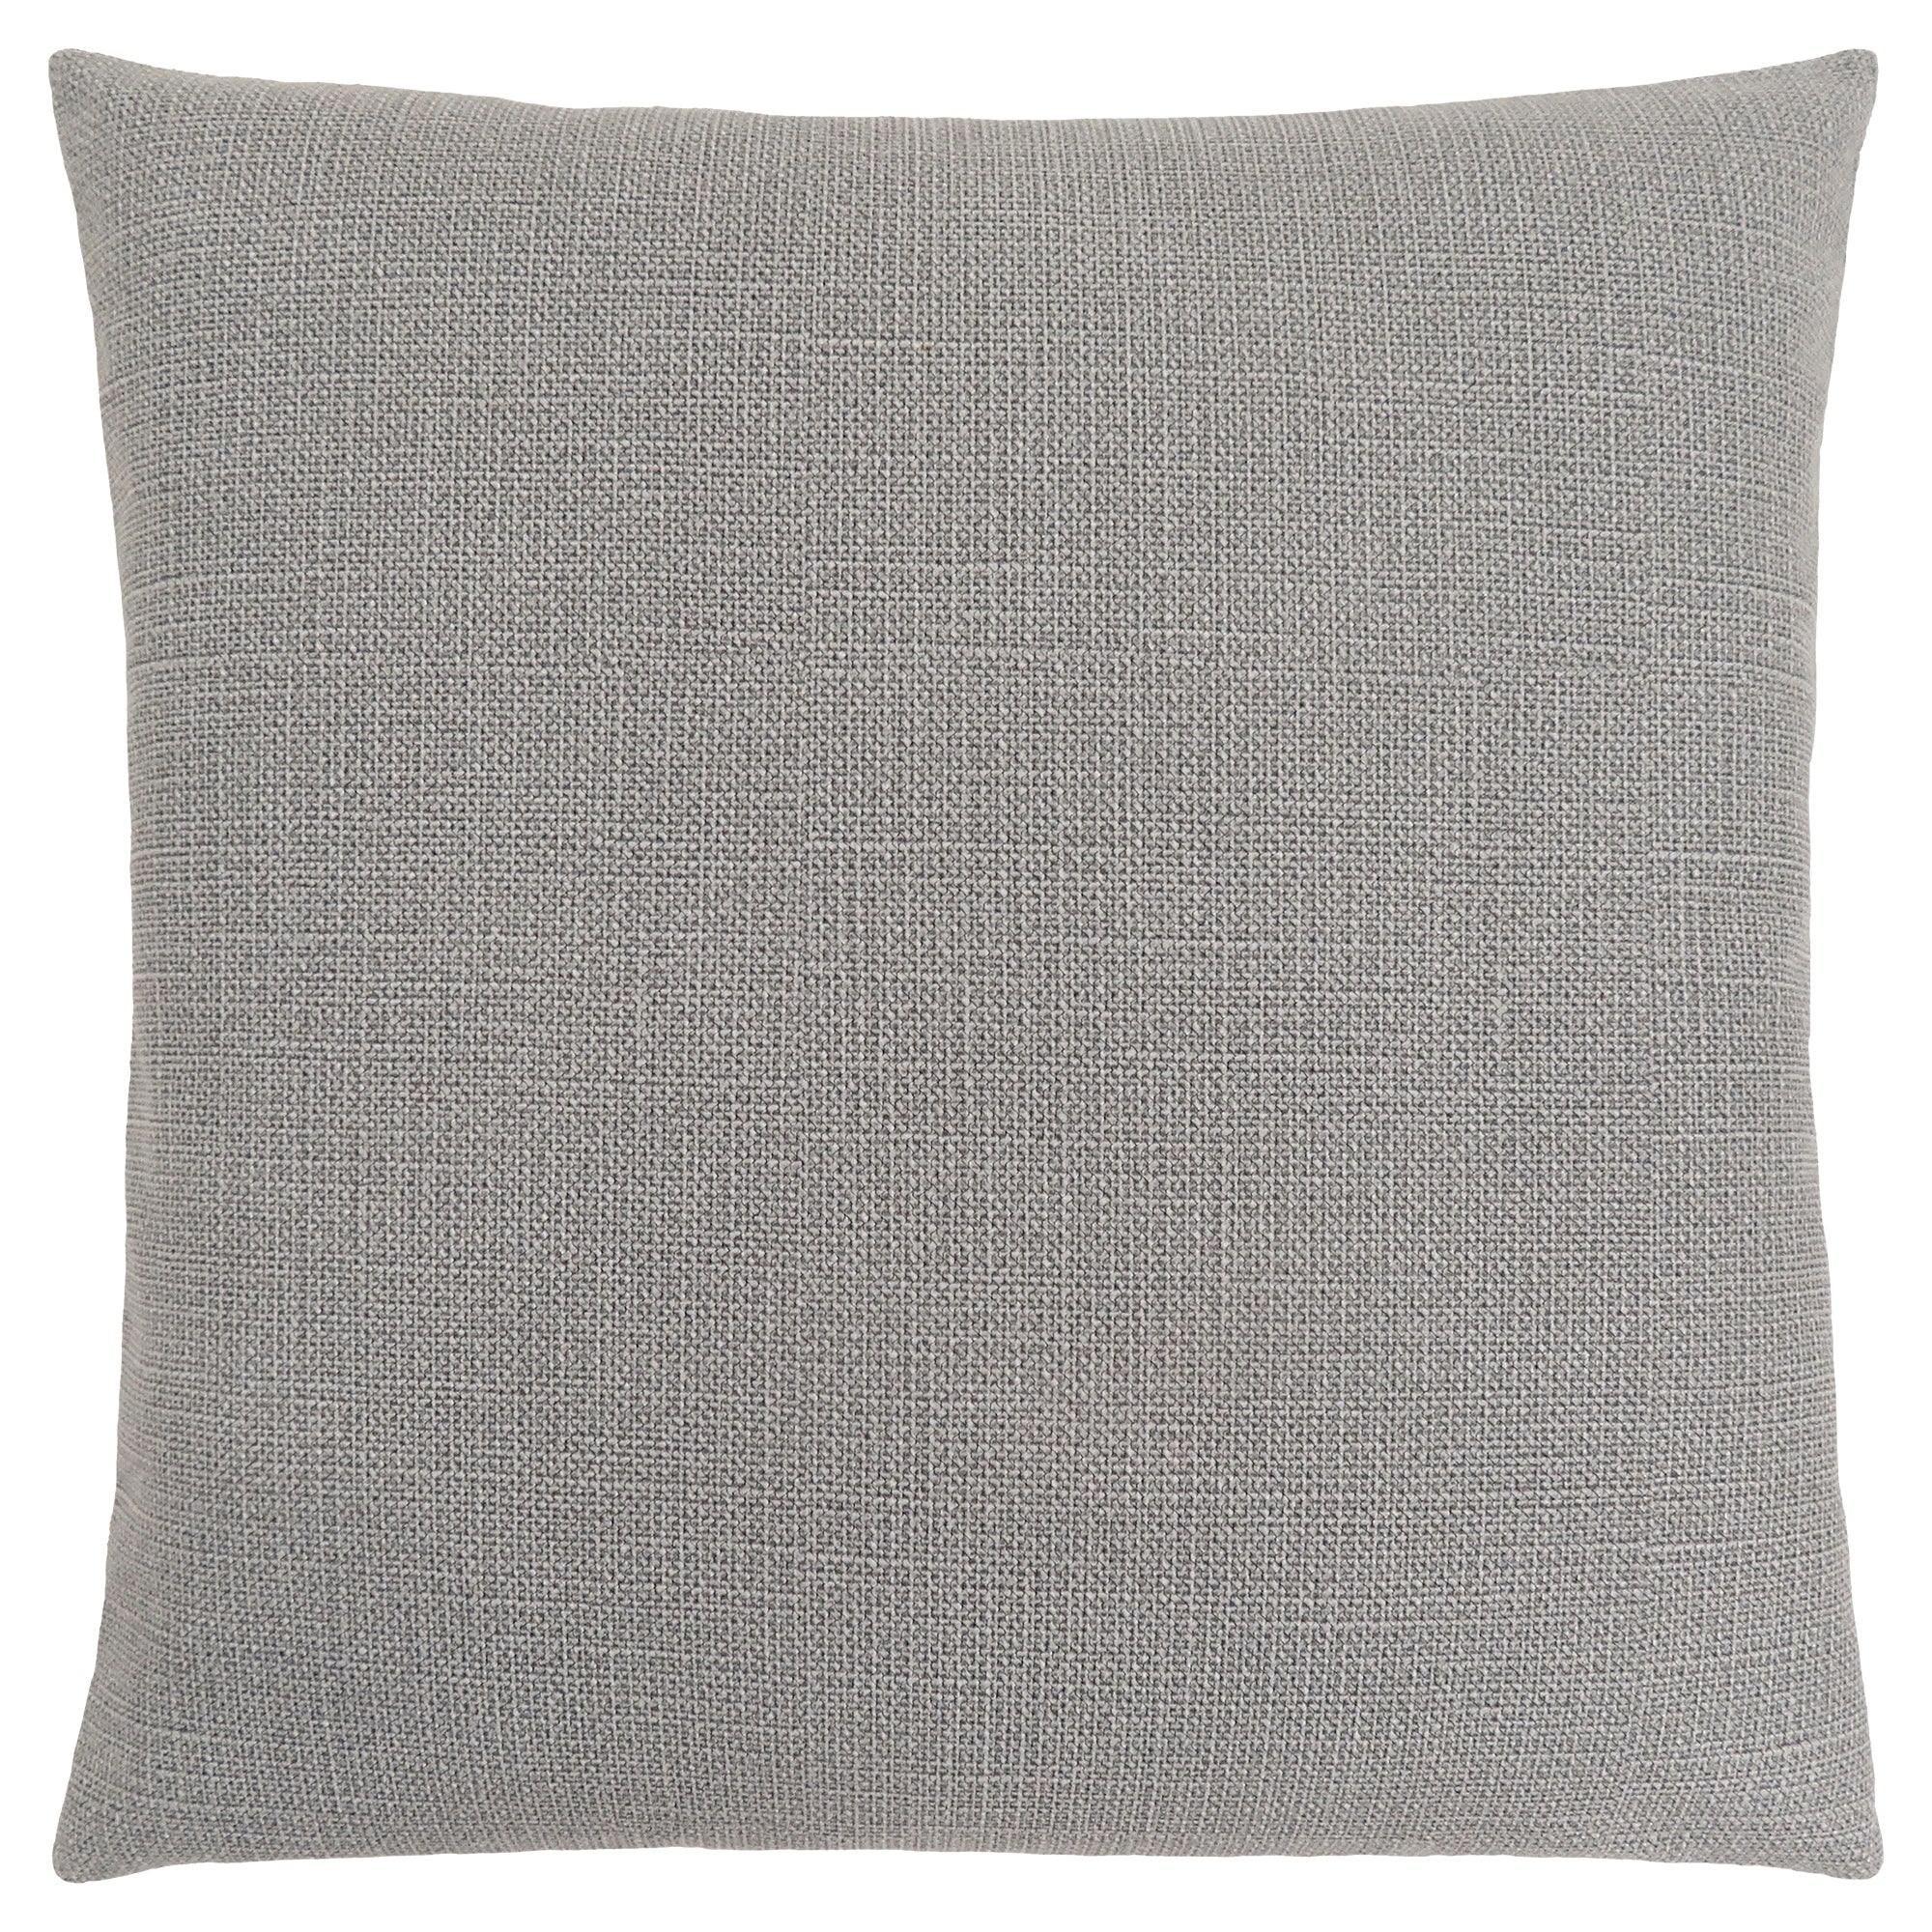 Pillow - 18X 18 / Patterned Light Grey / 1Pc